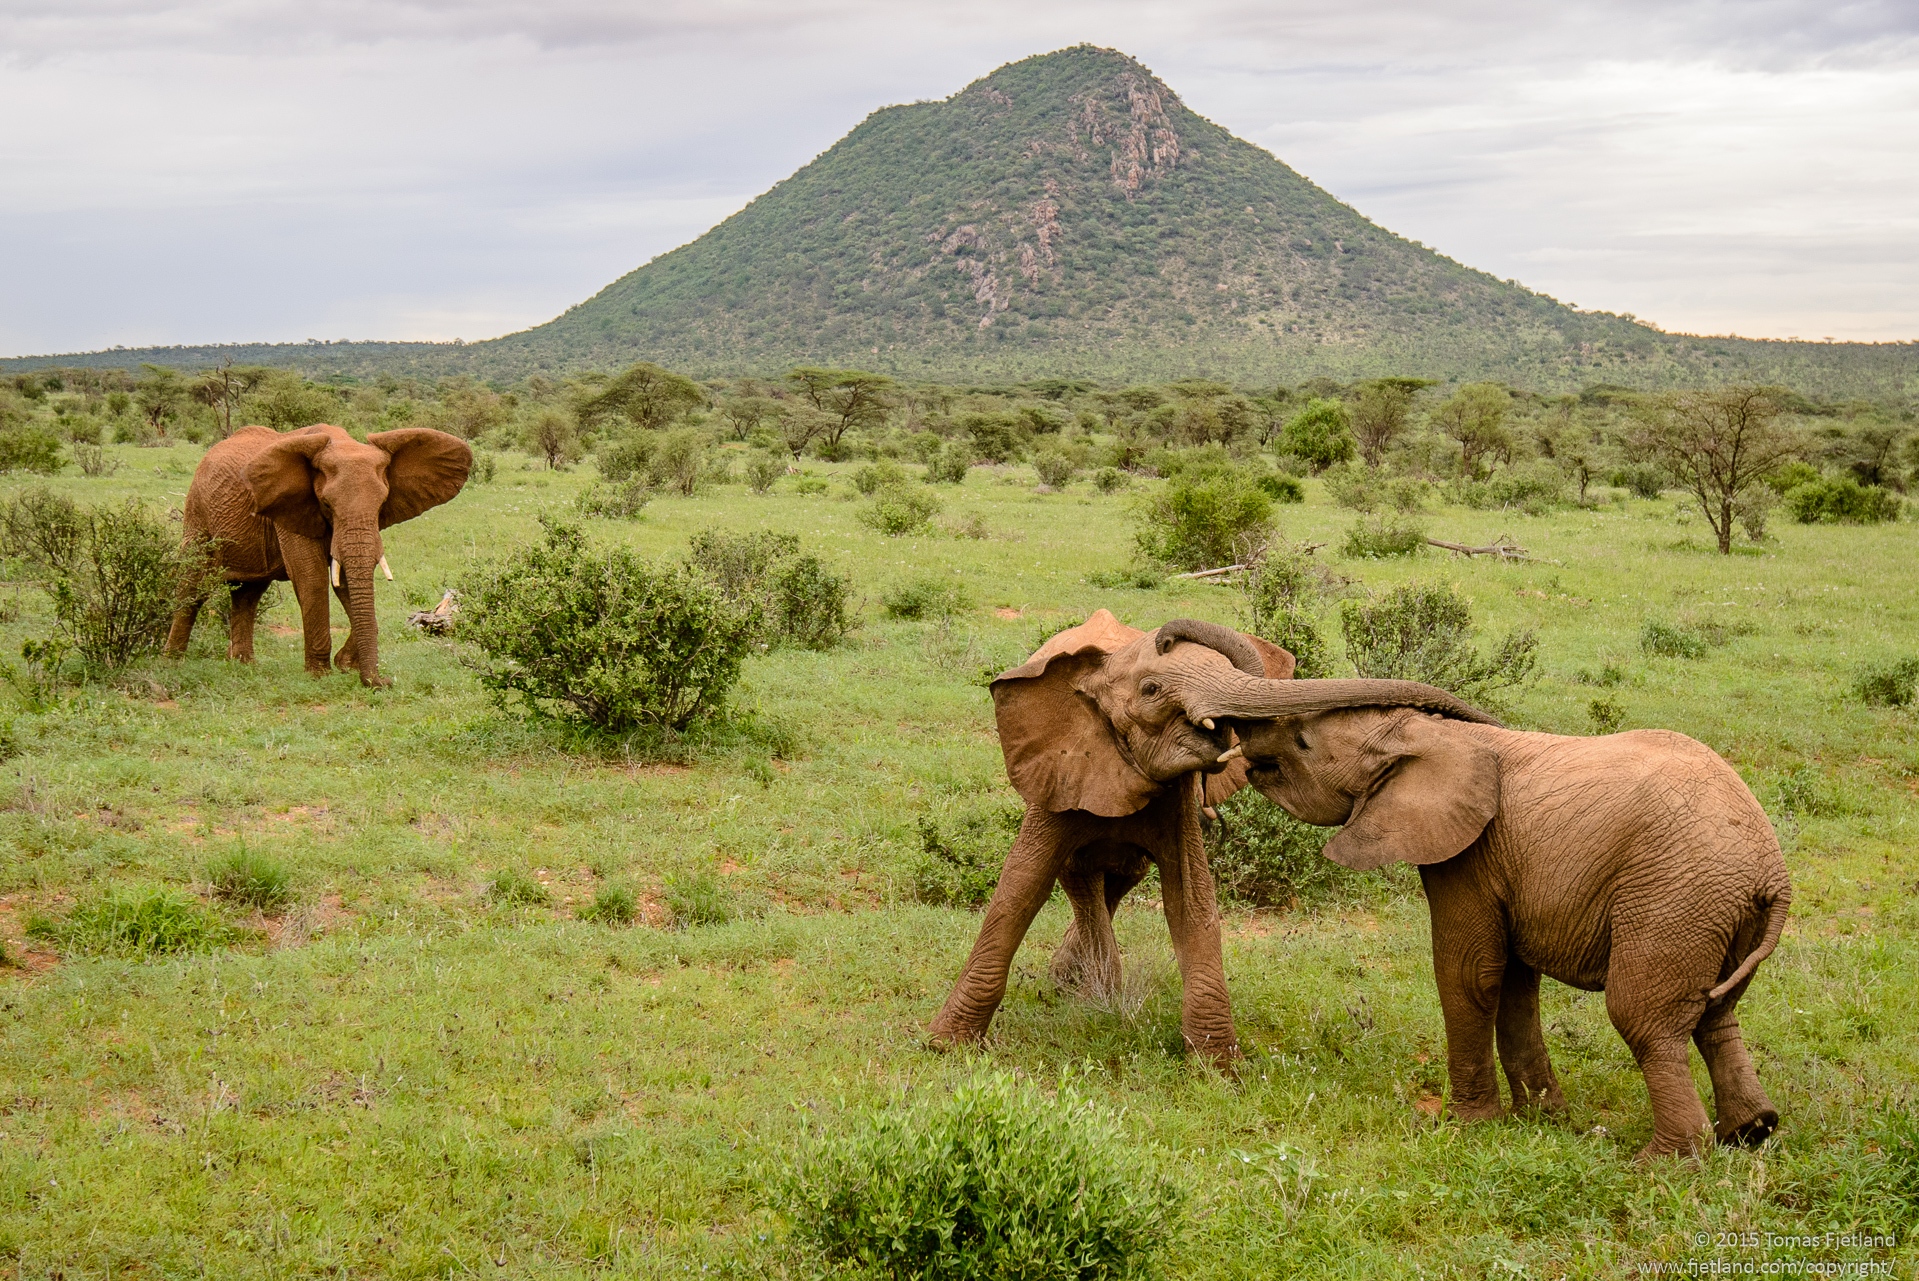 Two young elephants playfighting